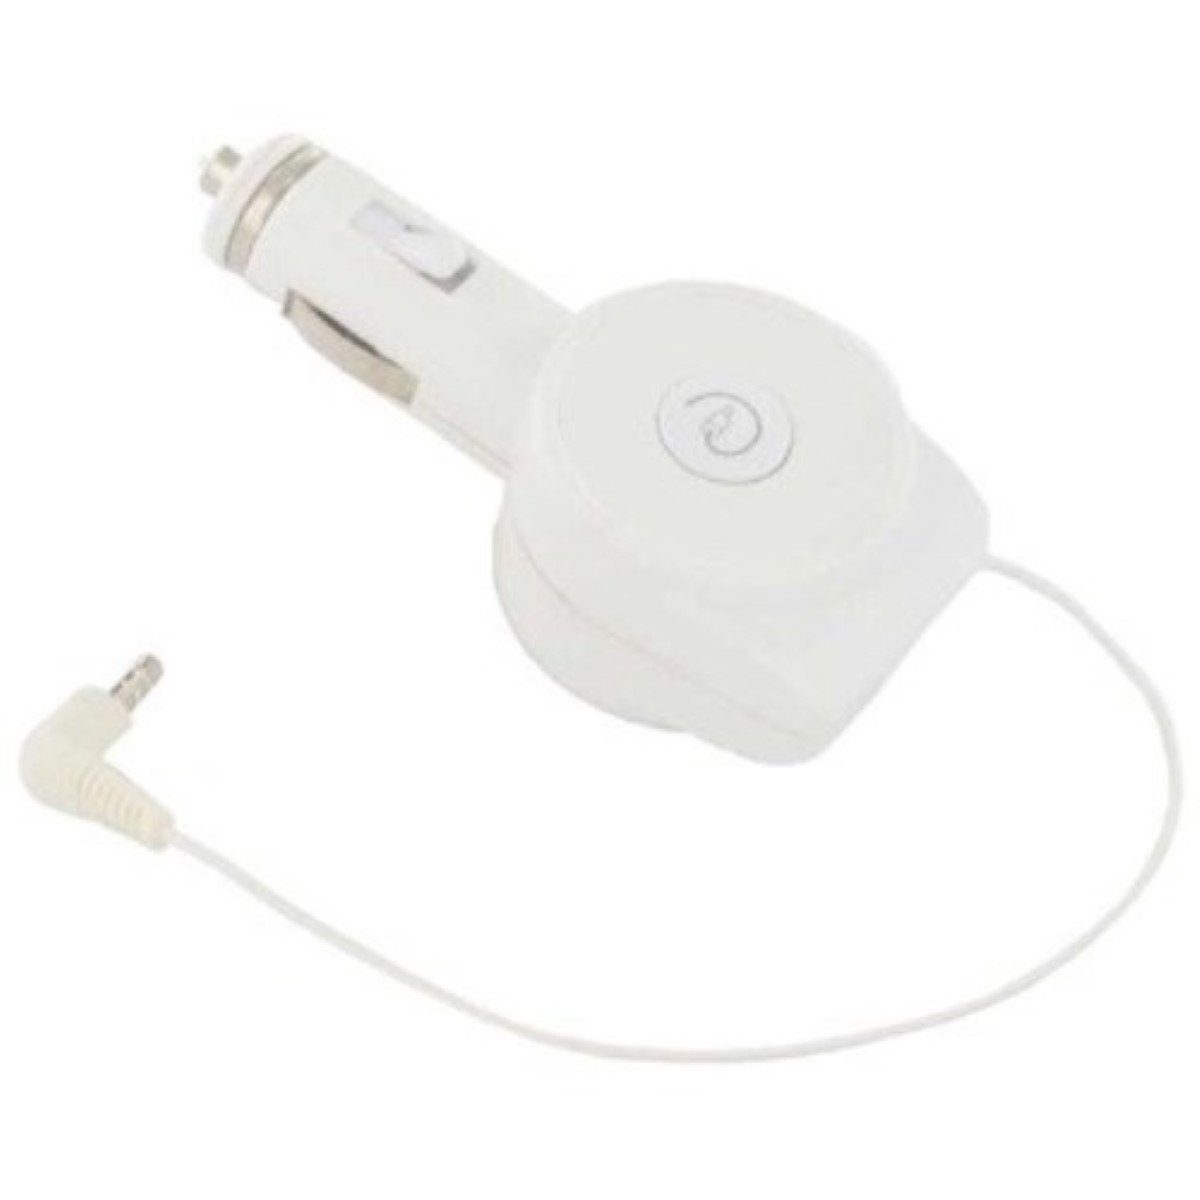 Adaper MP3-Player Handy zu Kfz FM Transmitter mm Klinke, 3,5-mm-Klinkenanschluss Weiß 3,5 Thomson KFZ-Transmitter